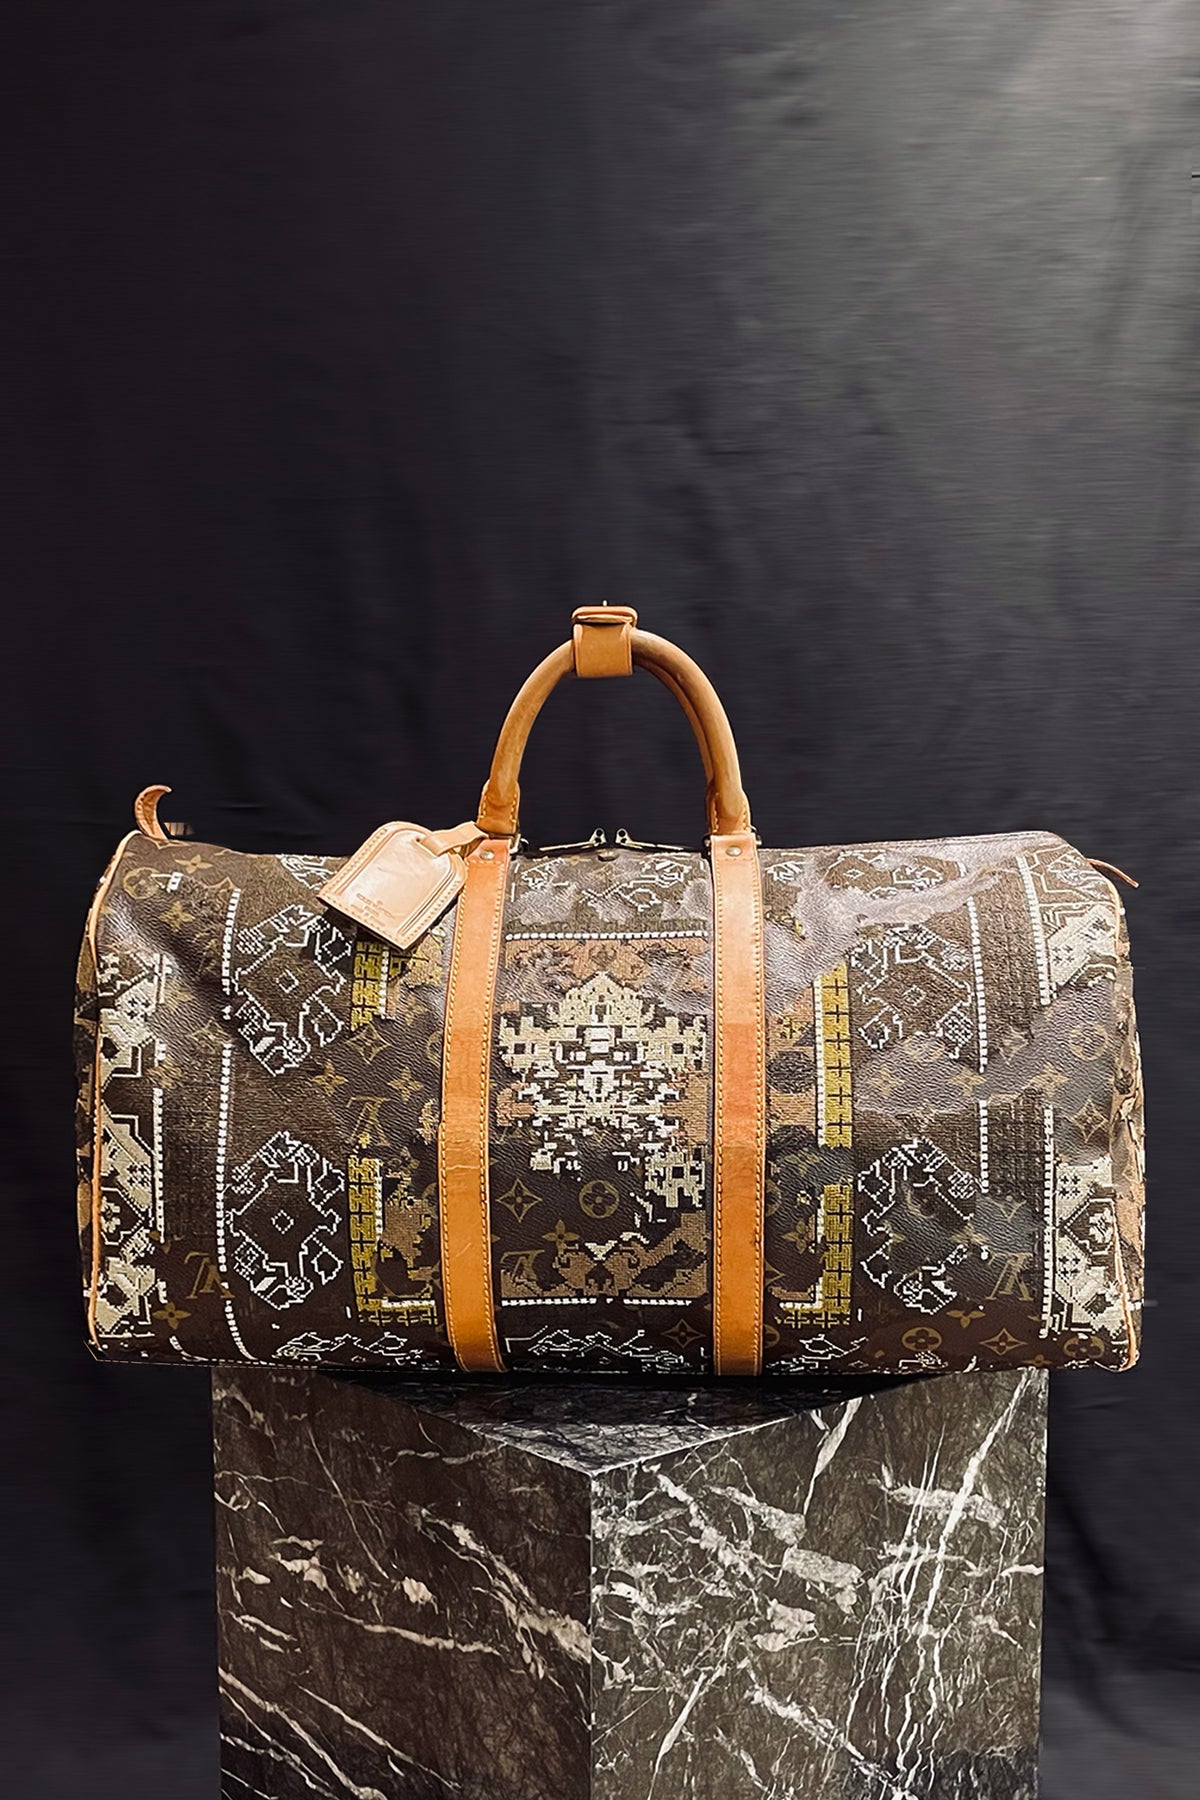 1993 Louis Vuitton monogram leather bag hand bag photo vintage print ad